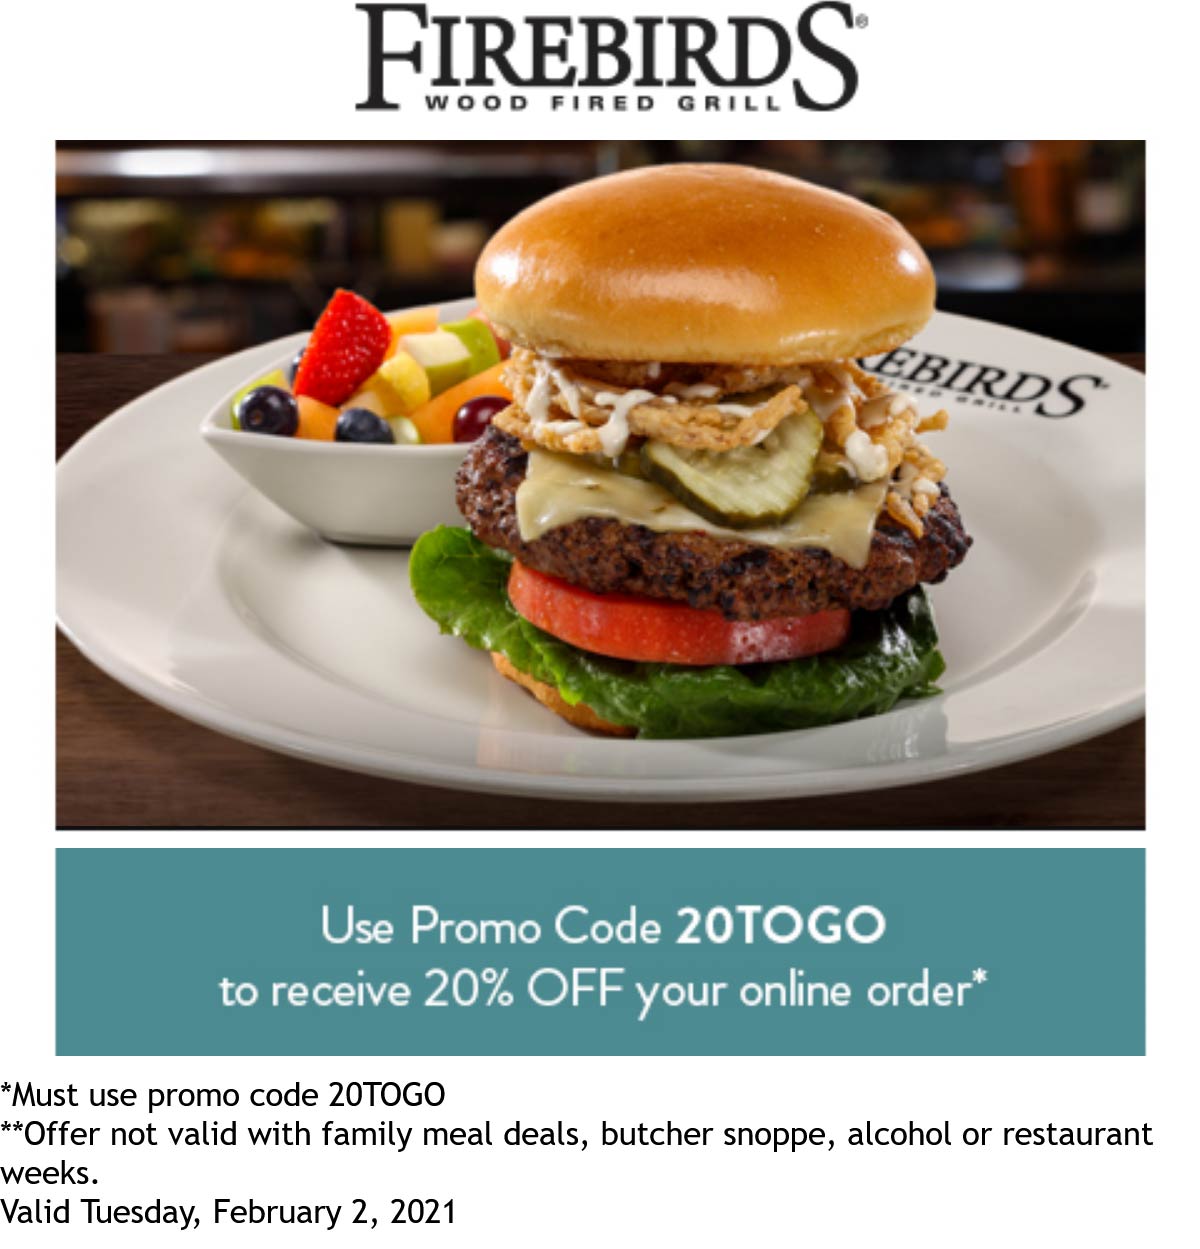 Firebirds restaurants Coupon  20% off takeout today at Firebirds wood fired grill restaurants via promo code 20TOGO #firebirds 